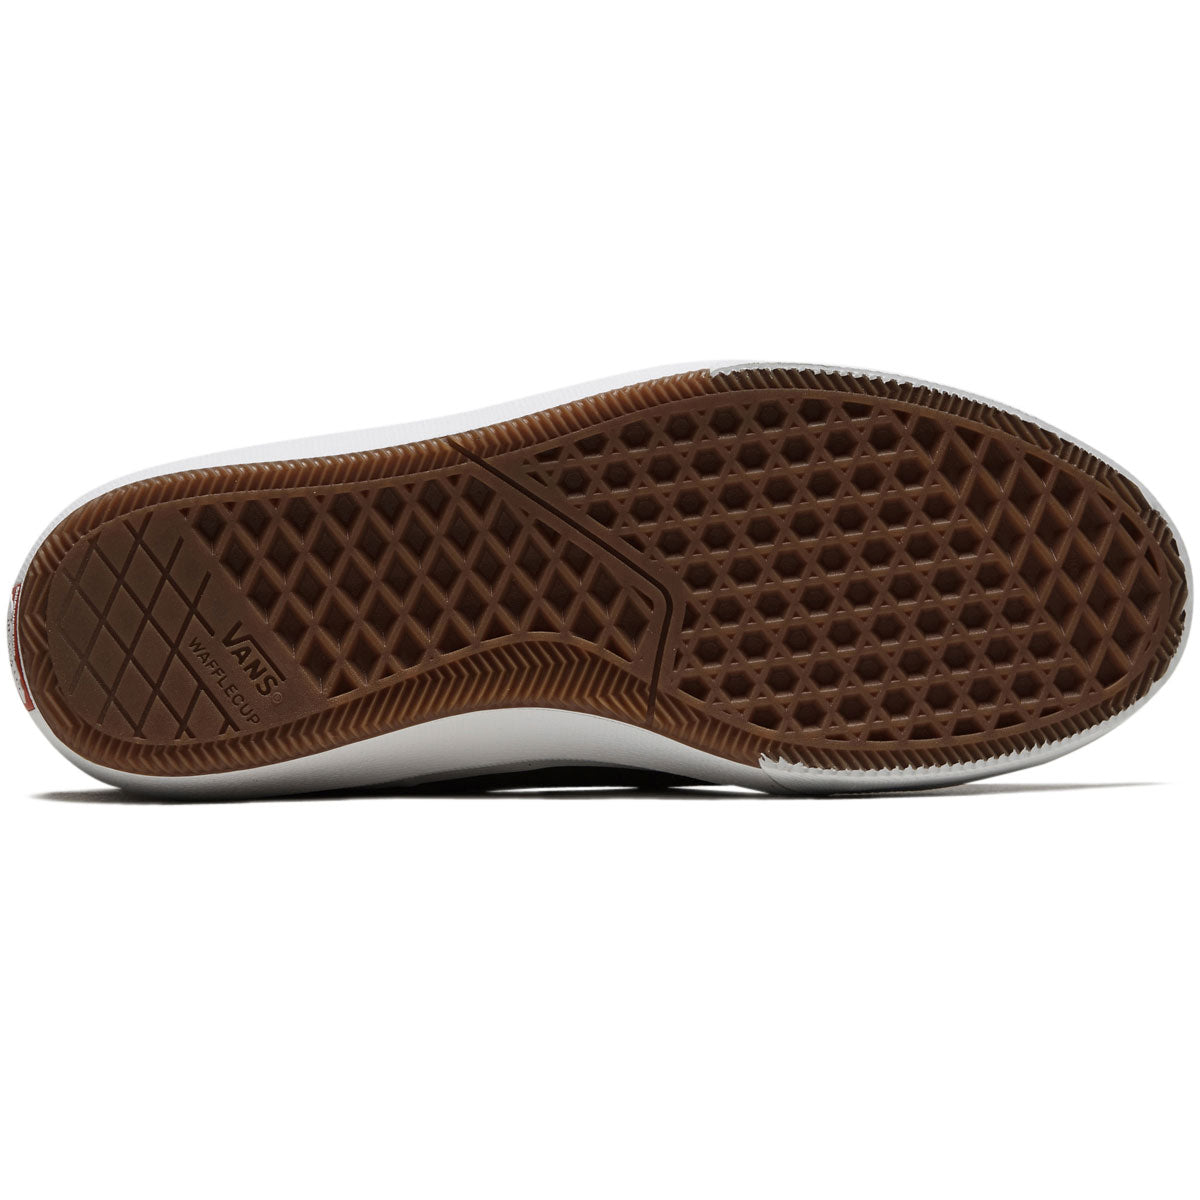 Vans Crockett High Decon Shoes - Brown/White image 4